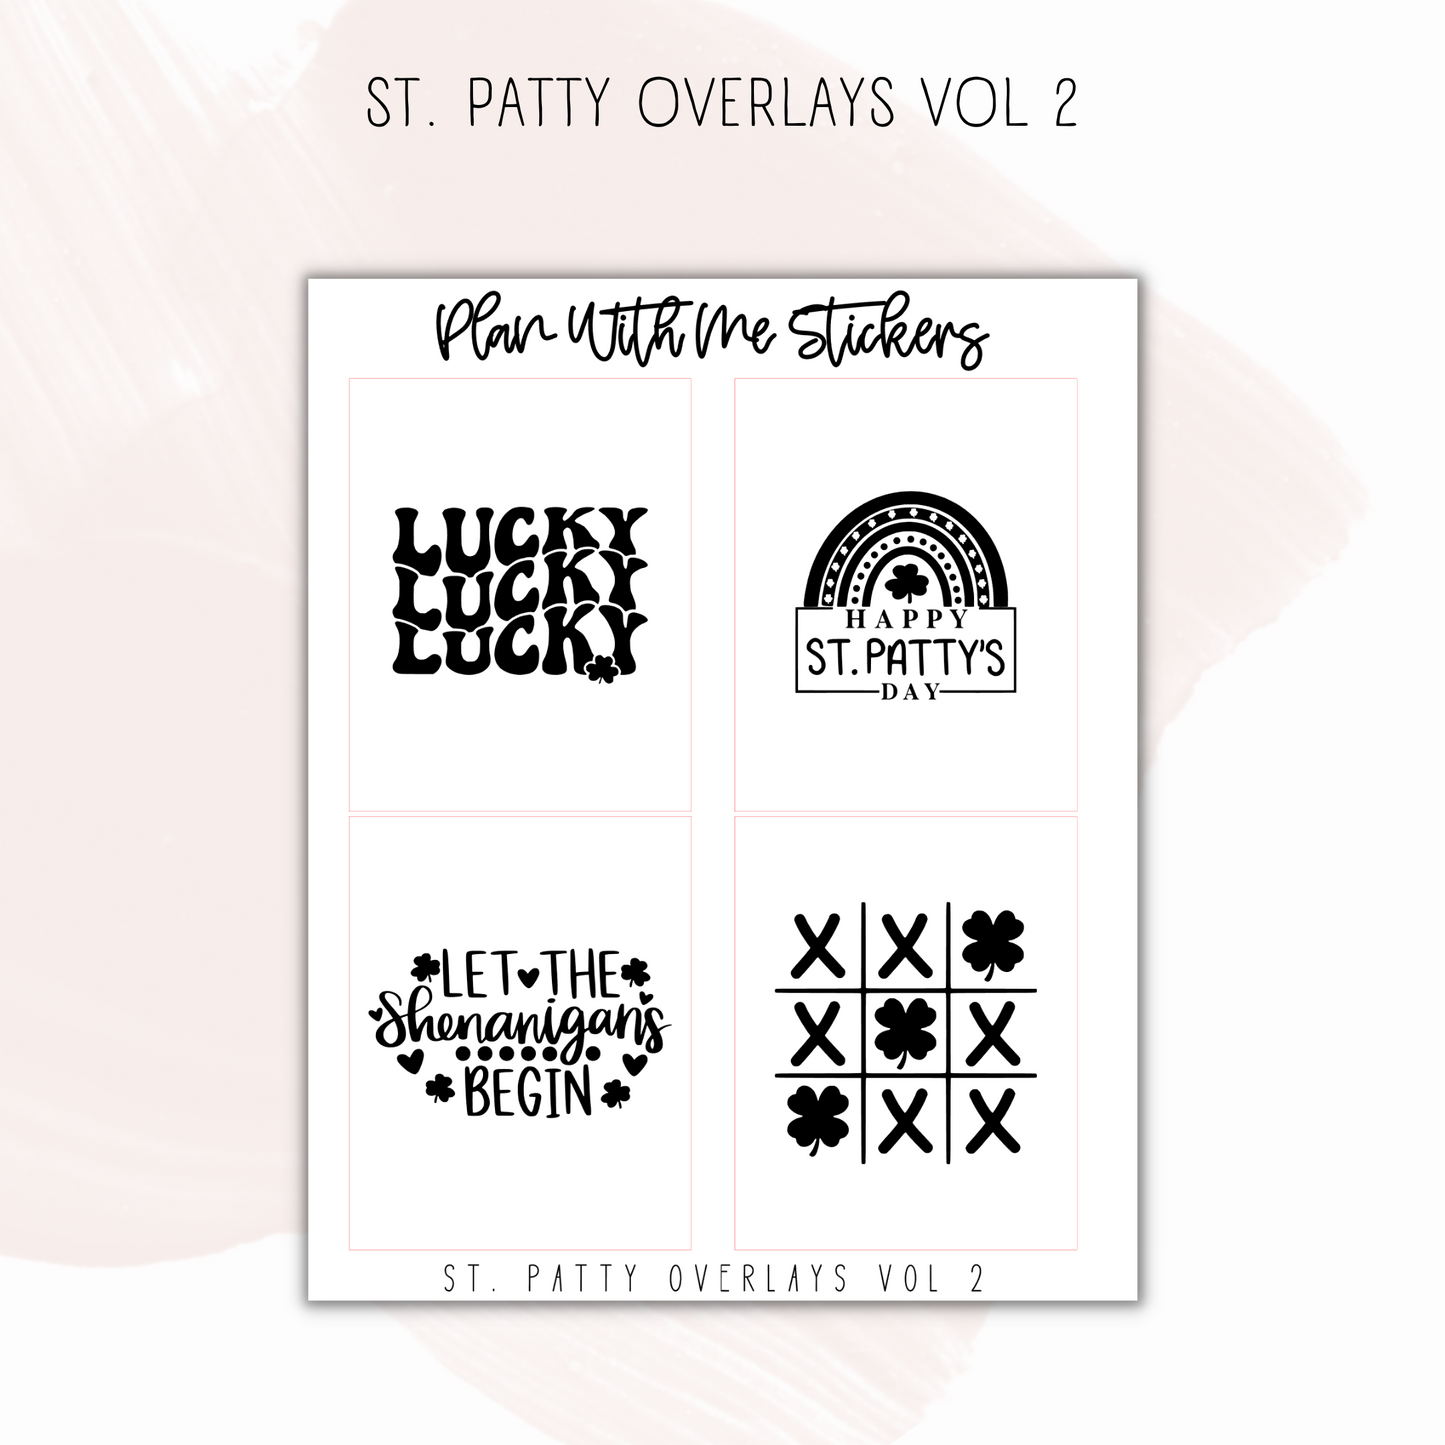 St. Patty Day Overlays Vol 2